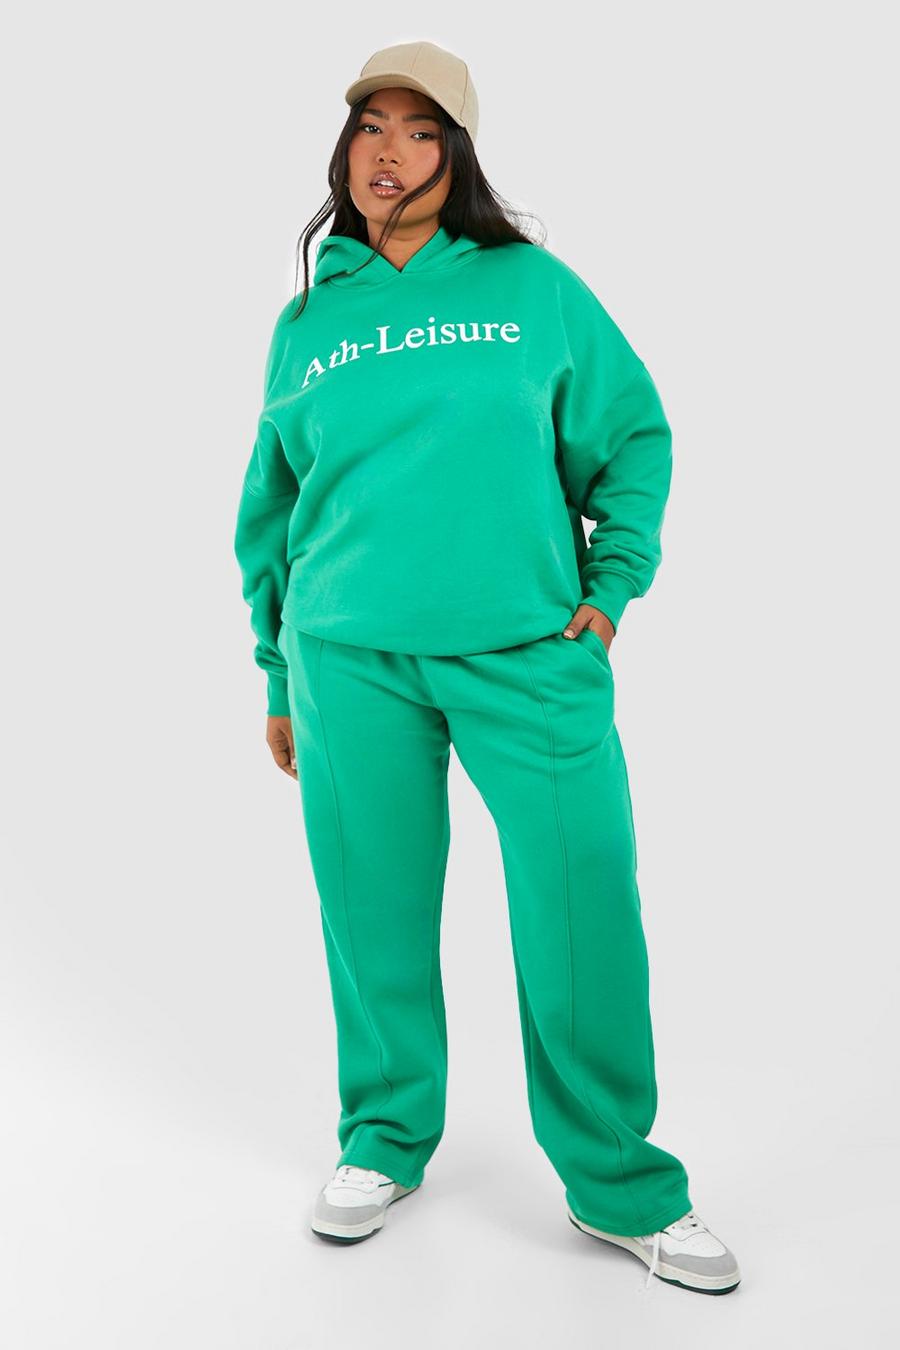 Plus Trainingsanzug mit Ath Leisure Print und Kapuze, Green grün